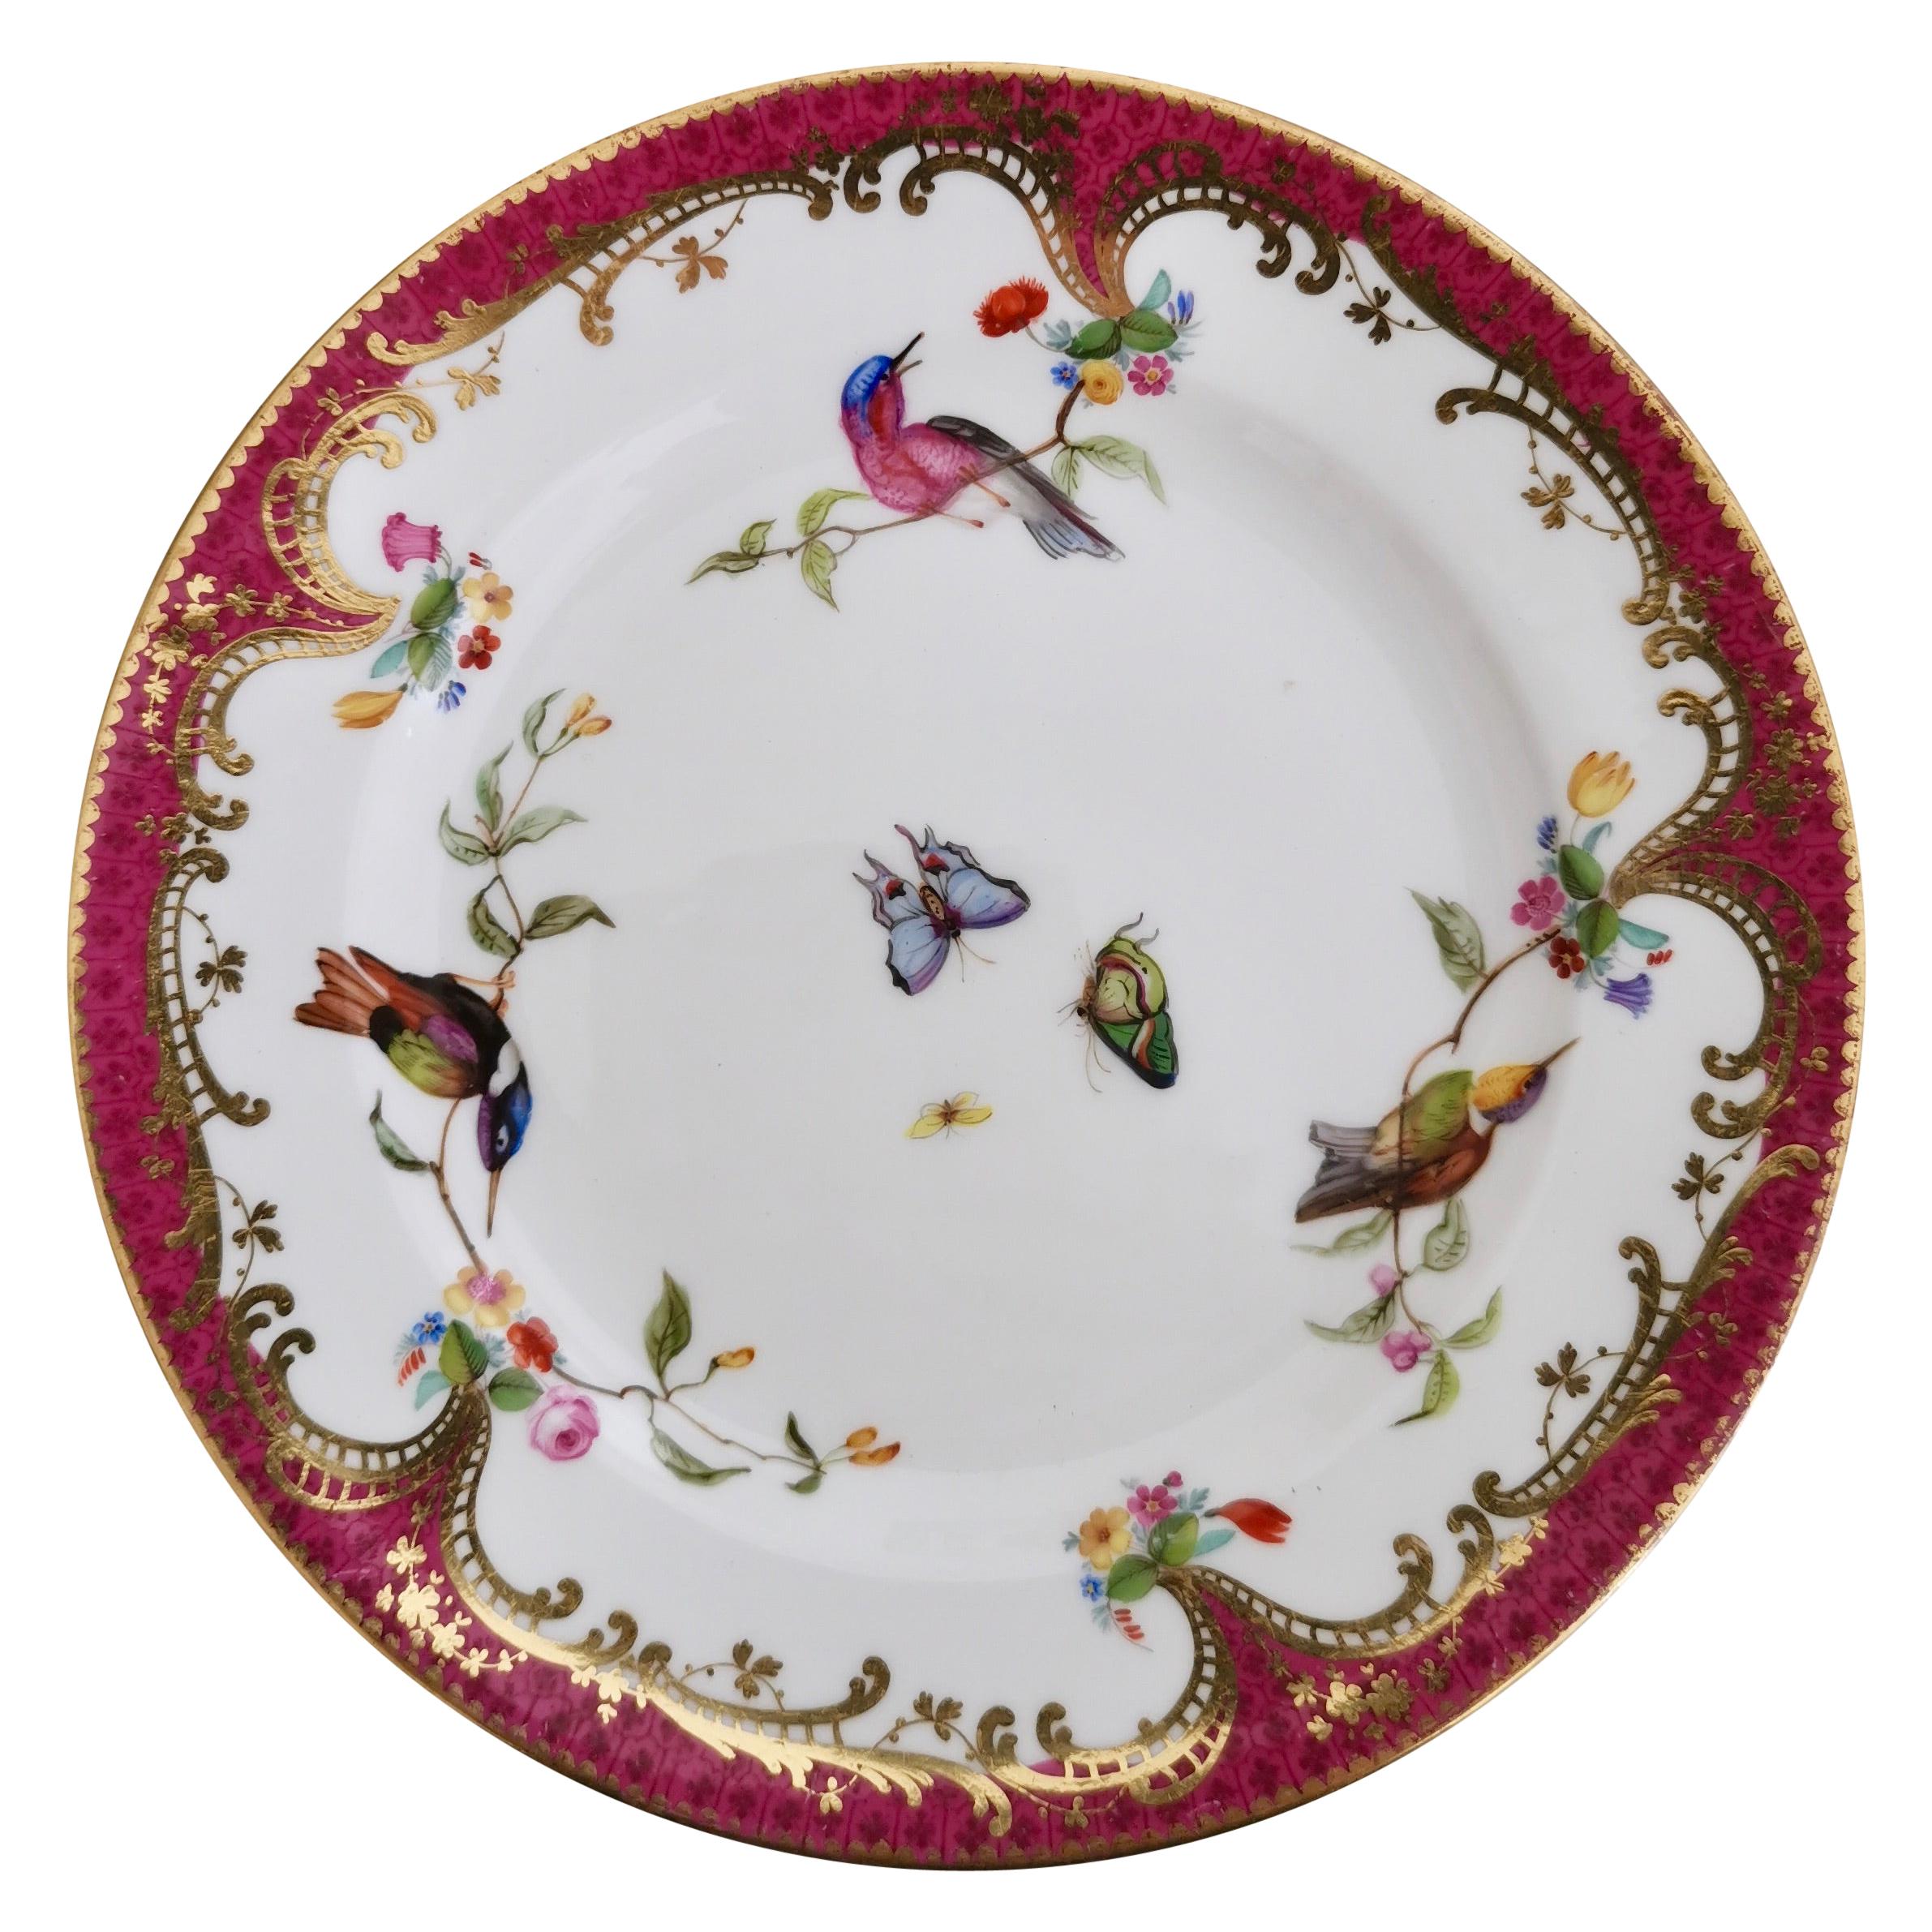 Coalport Small Porcelain Plate, Humming Birds by John Randall, circa 1865